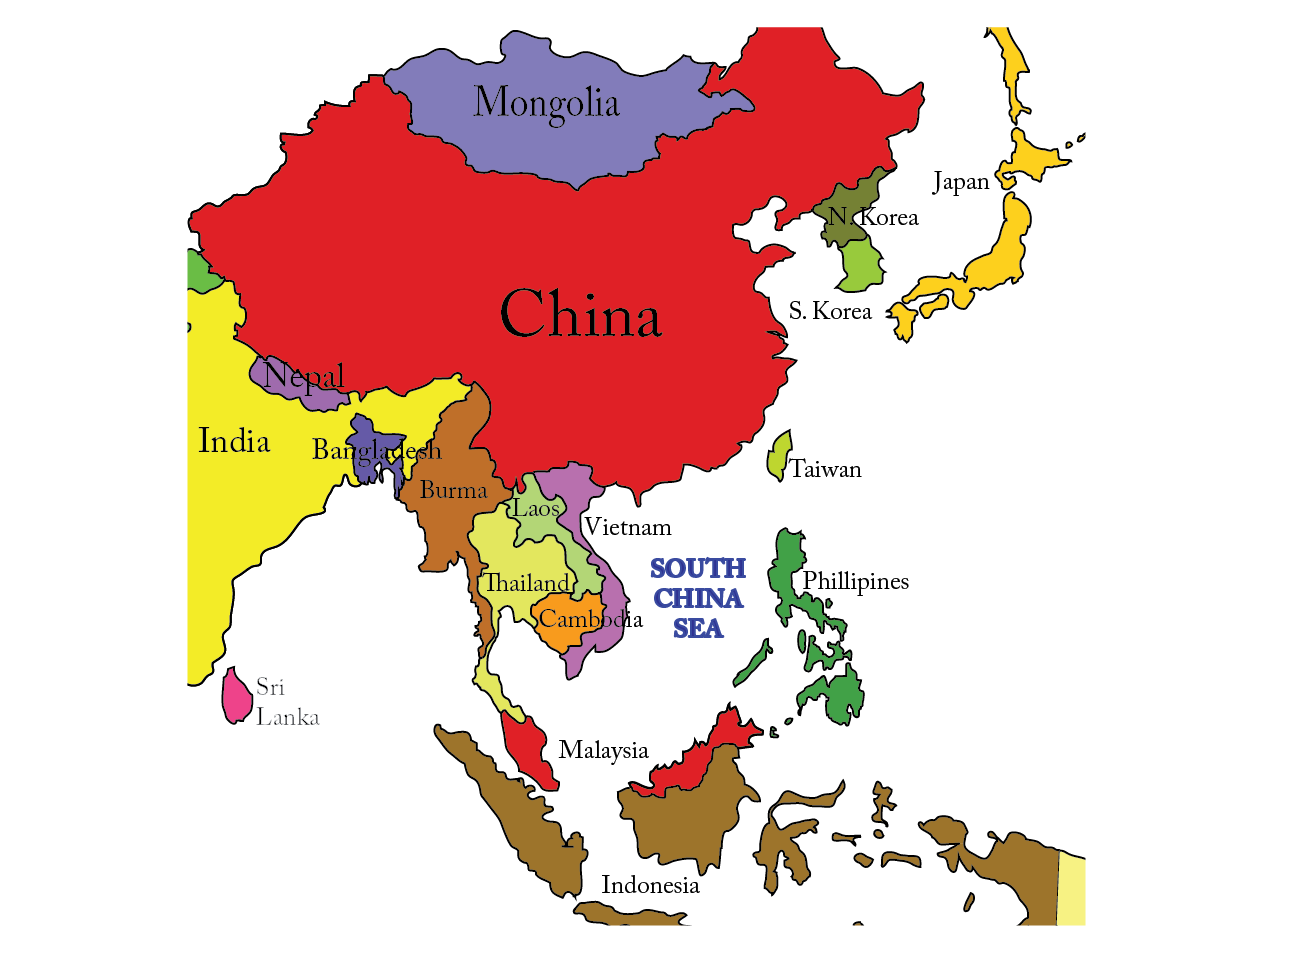 Asia страны. Восток и Юго Восток Азии на карте. Карта Юго Востока Азии. Государства Восточной Азии на карте. Юго-Восточная Азия на карте.